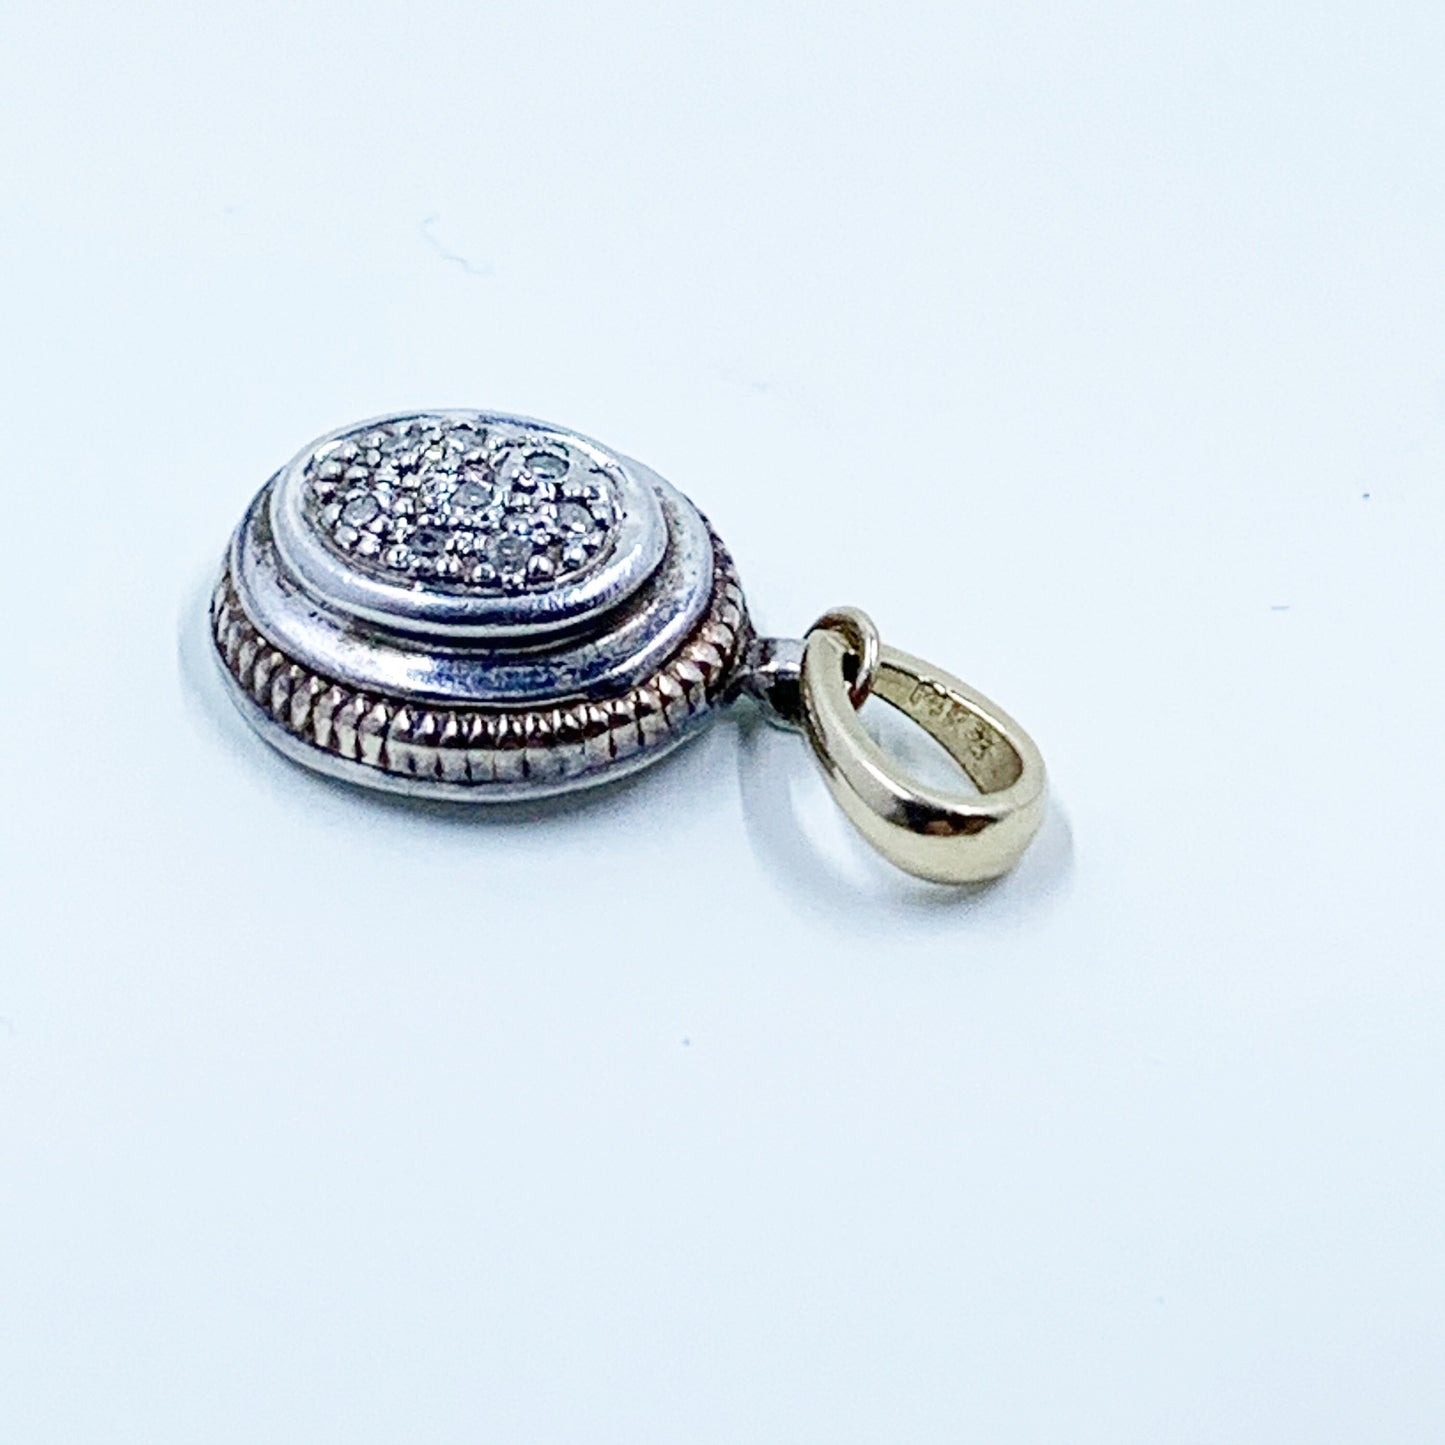 Vintage Silver and Gold Diamond Pendant | 14k Gold Diamond Charm | Two Tone Mixed Metal Pendant